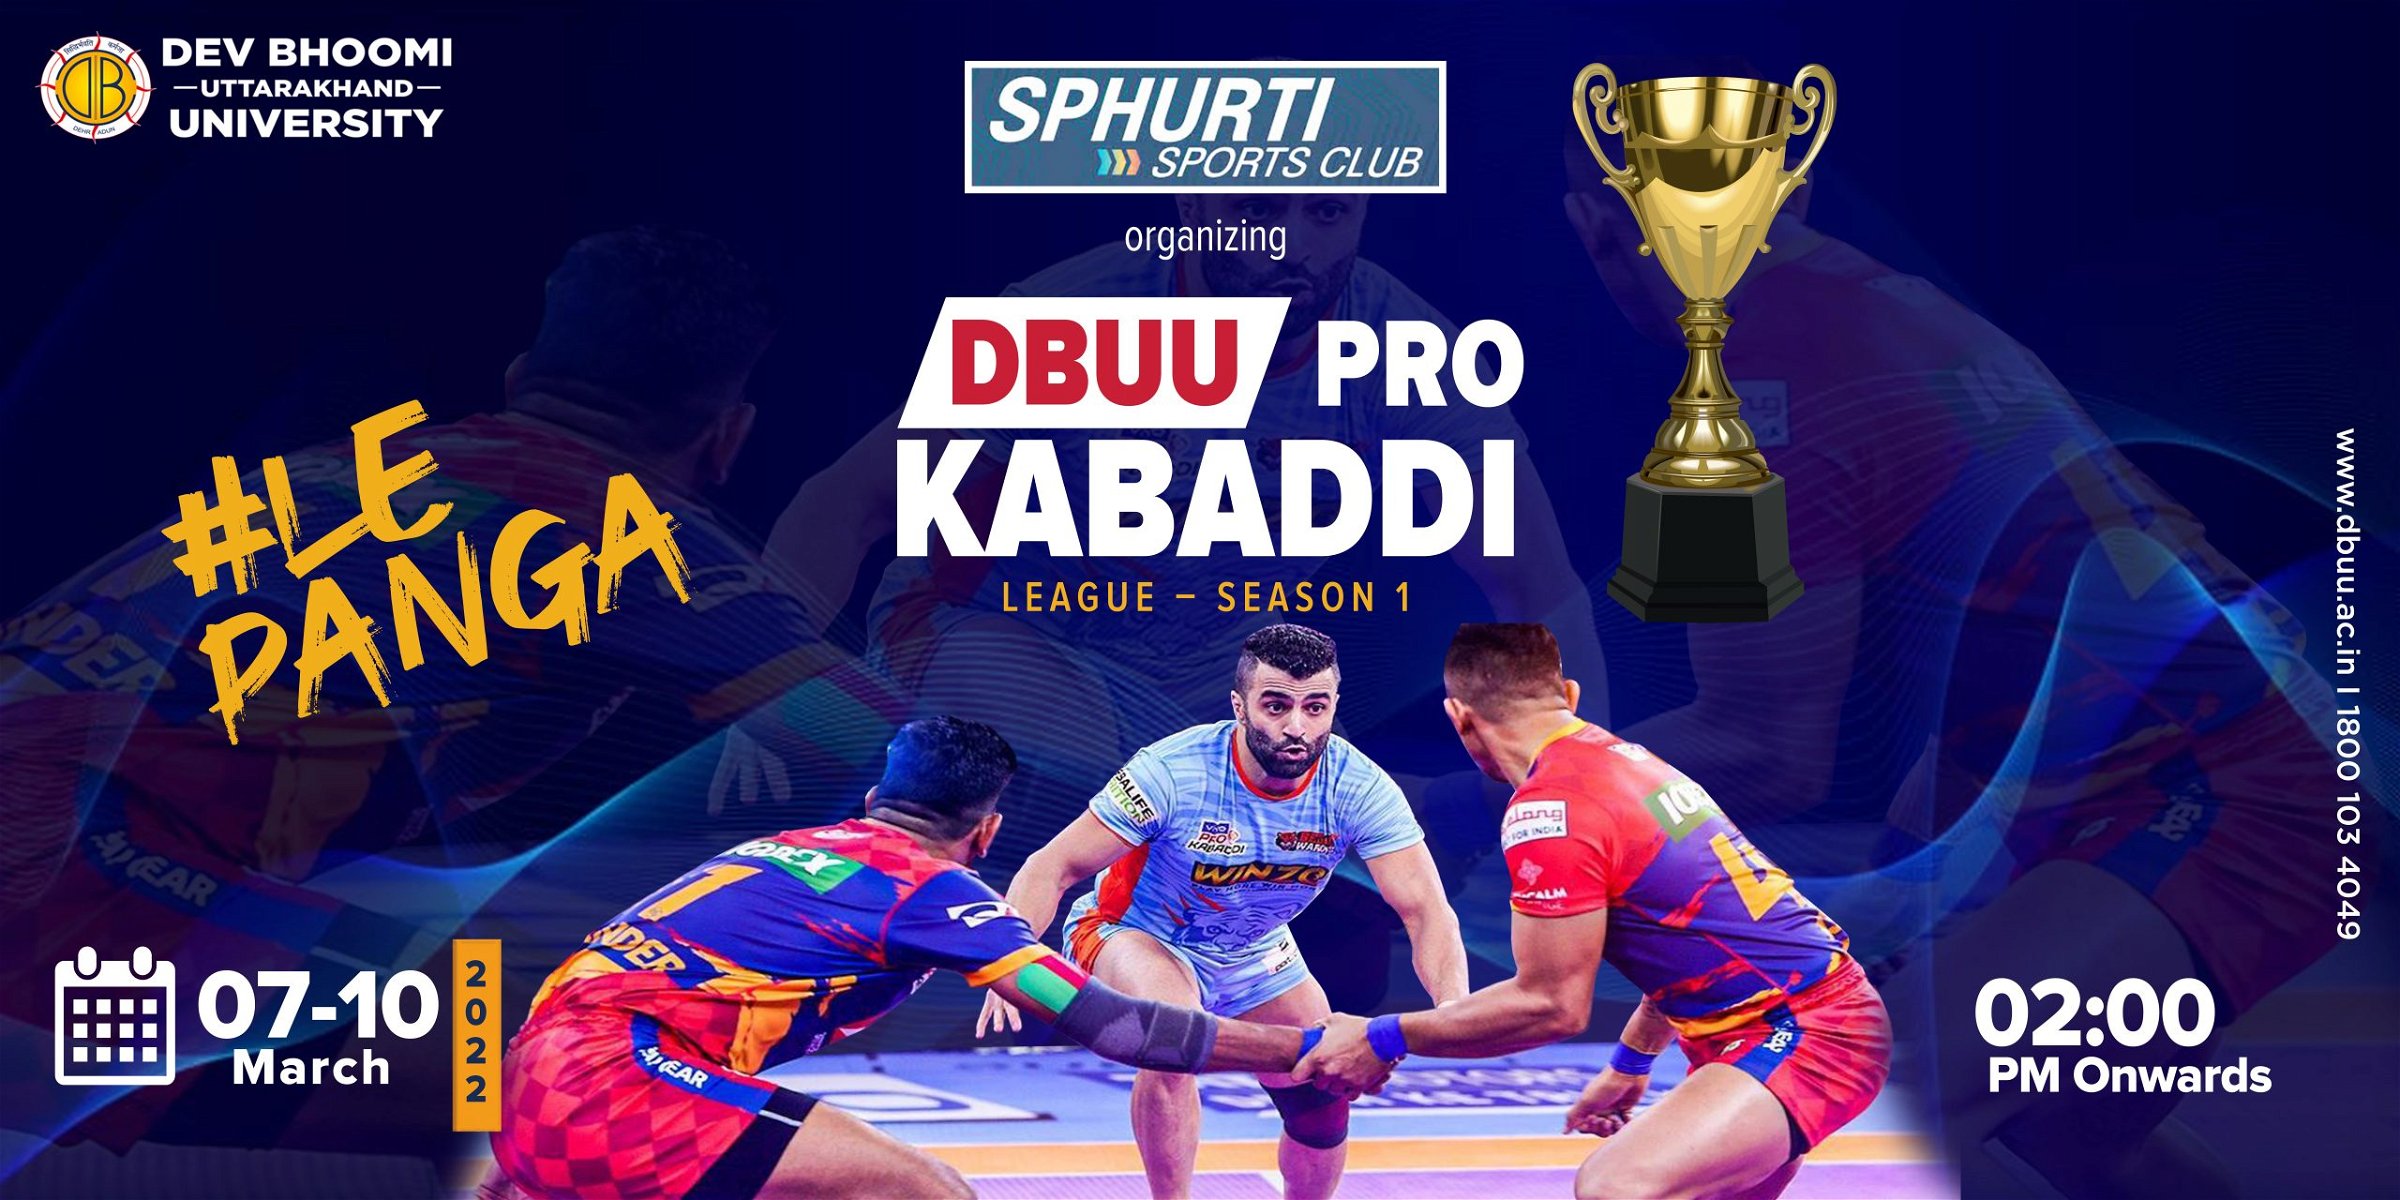 DBUU Pro Kabaddi League – Season 1